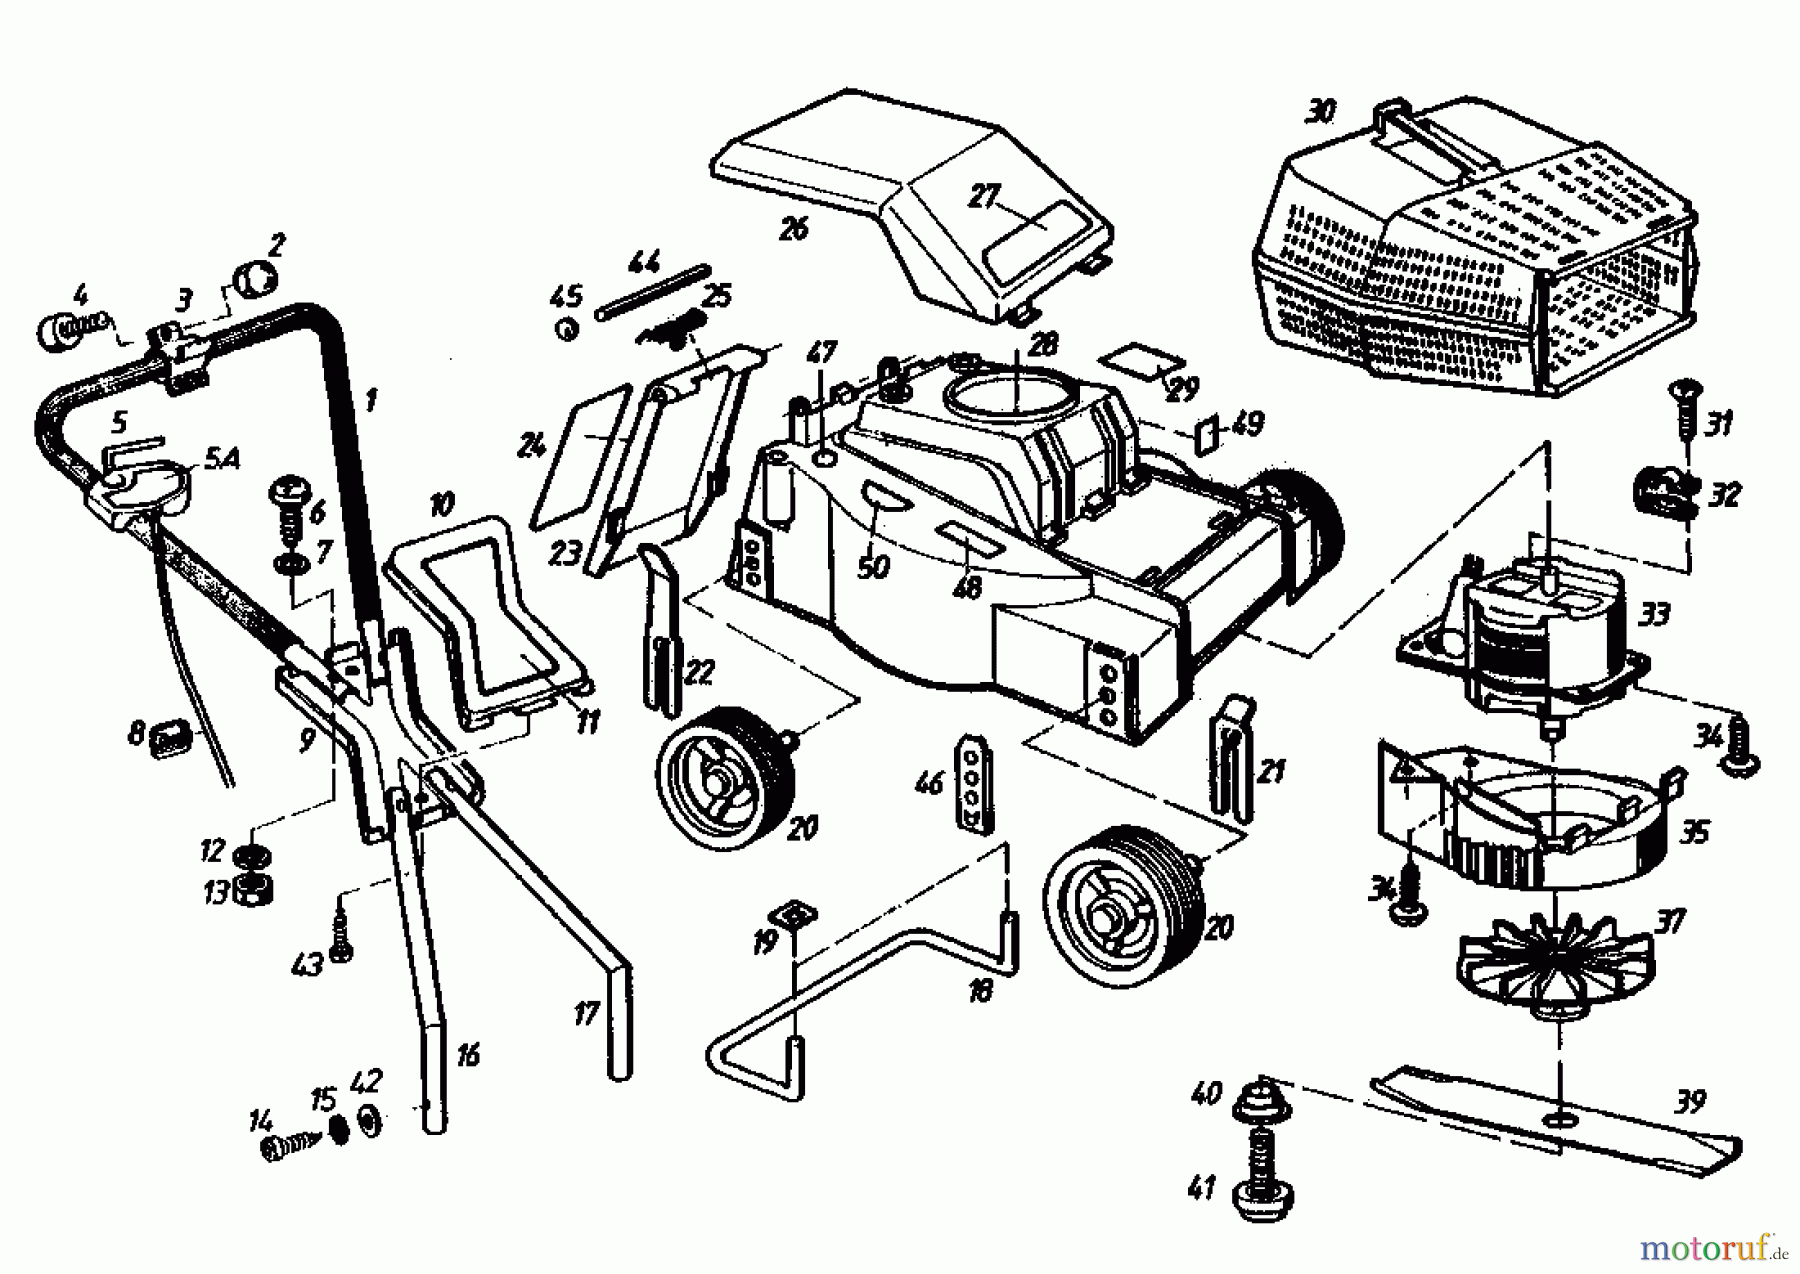  Gutbrod Electric mower HE 32 02872.02  (1986) Basic machine